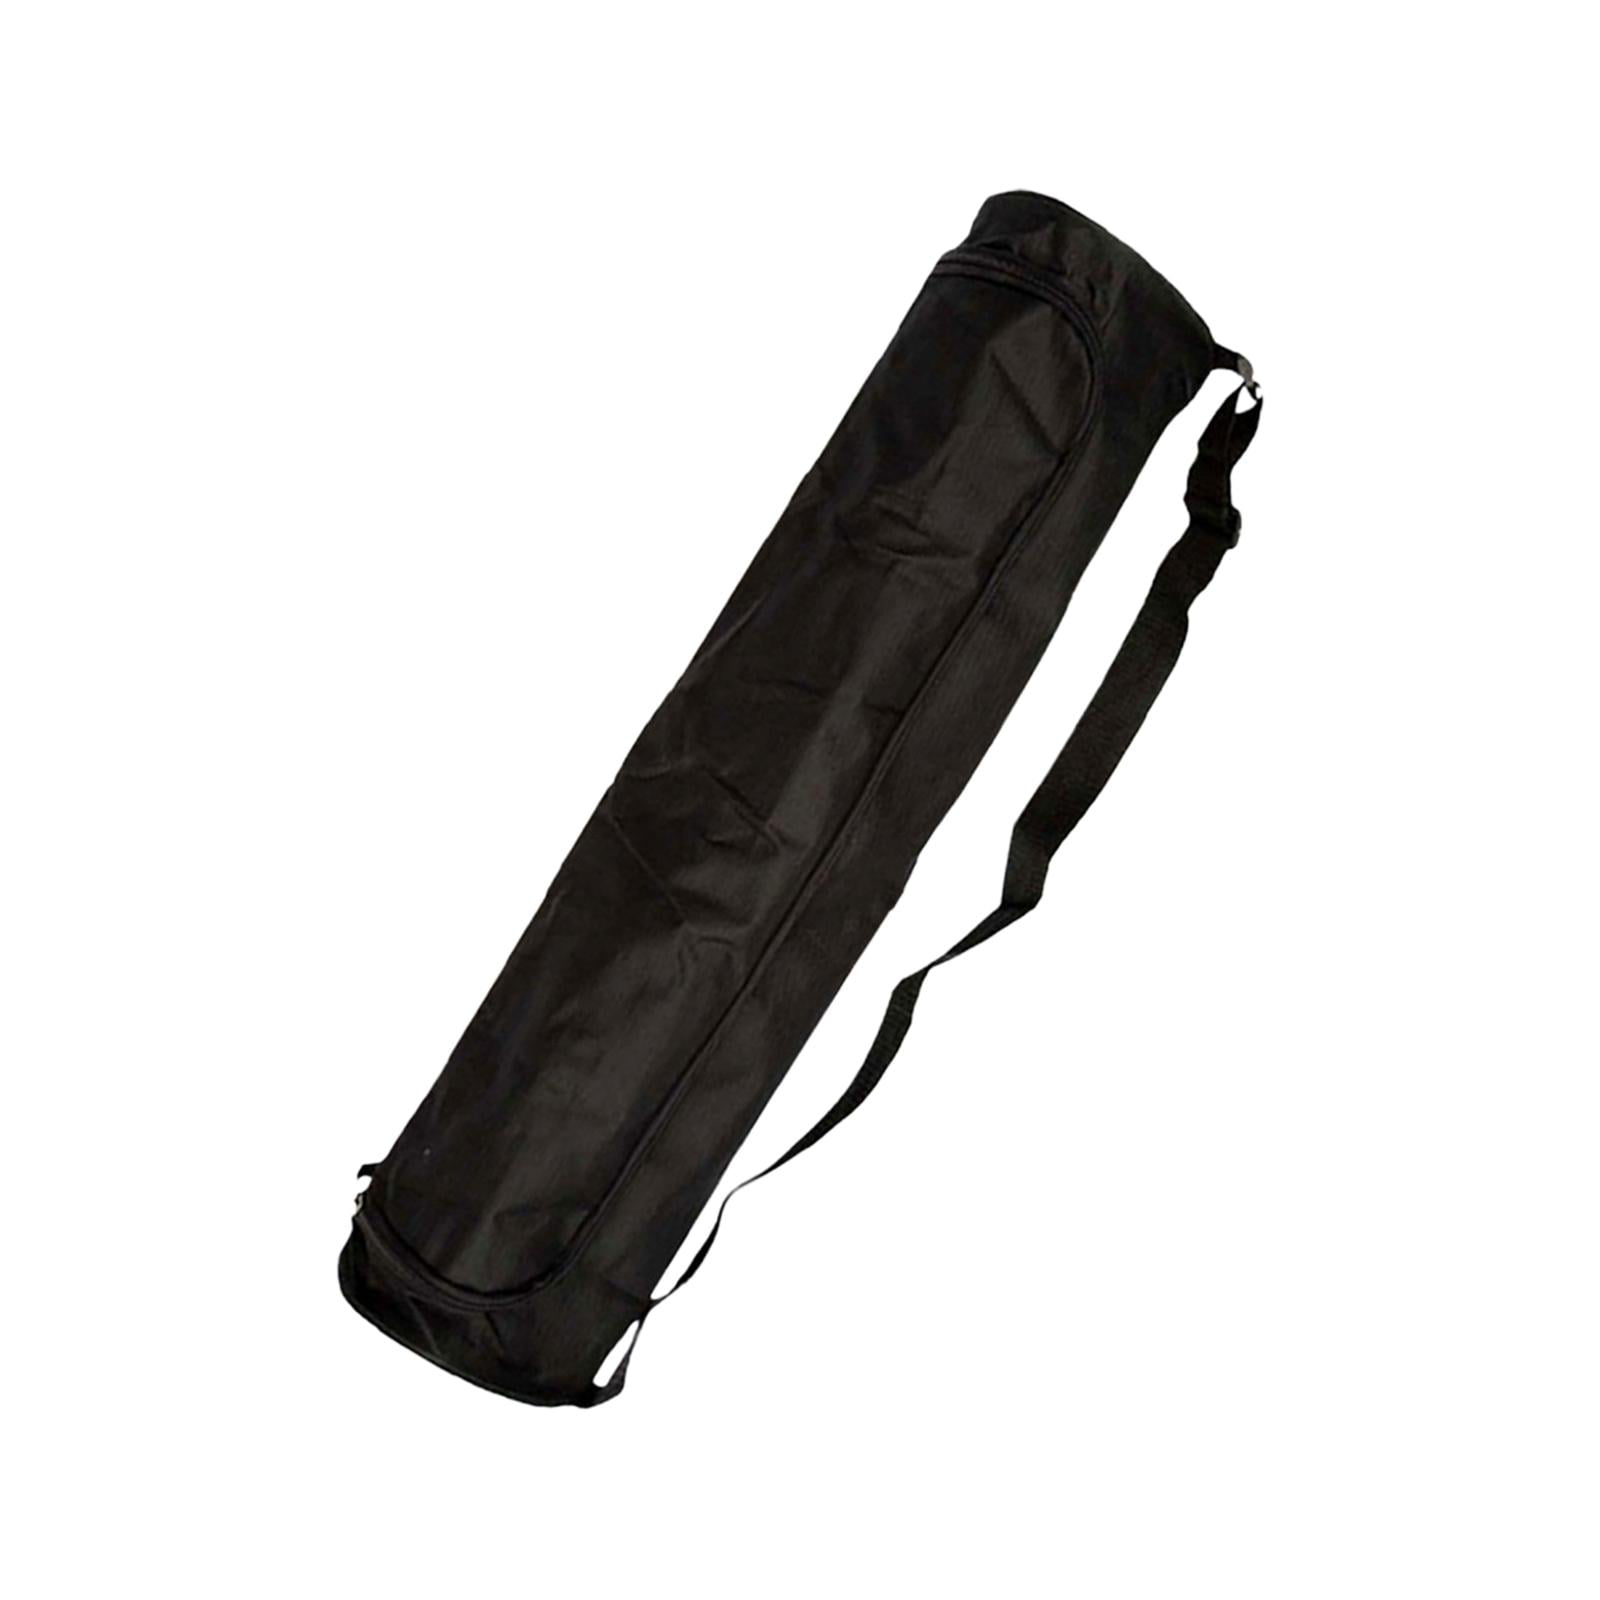 Gaiam Yoga Mat Bag - Wander Free Yoga Mat Carrier Pouch Tote